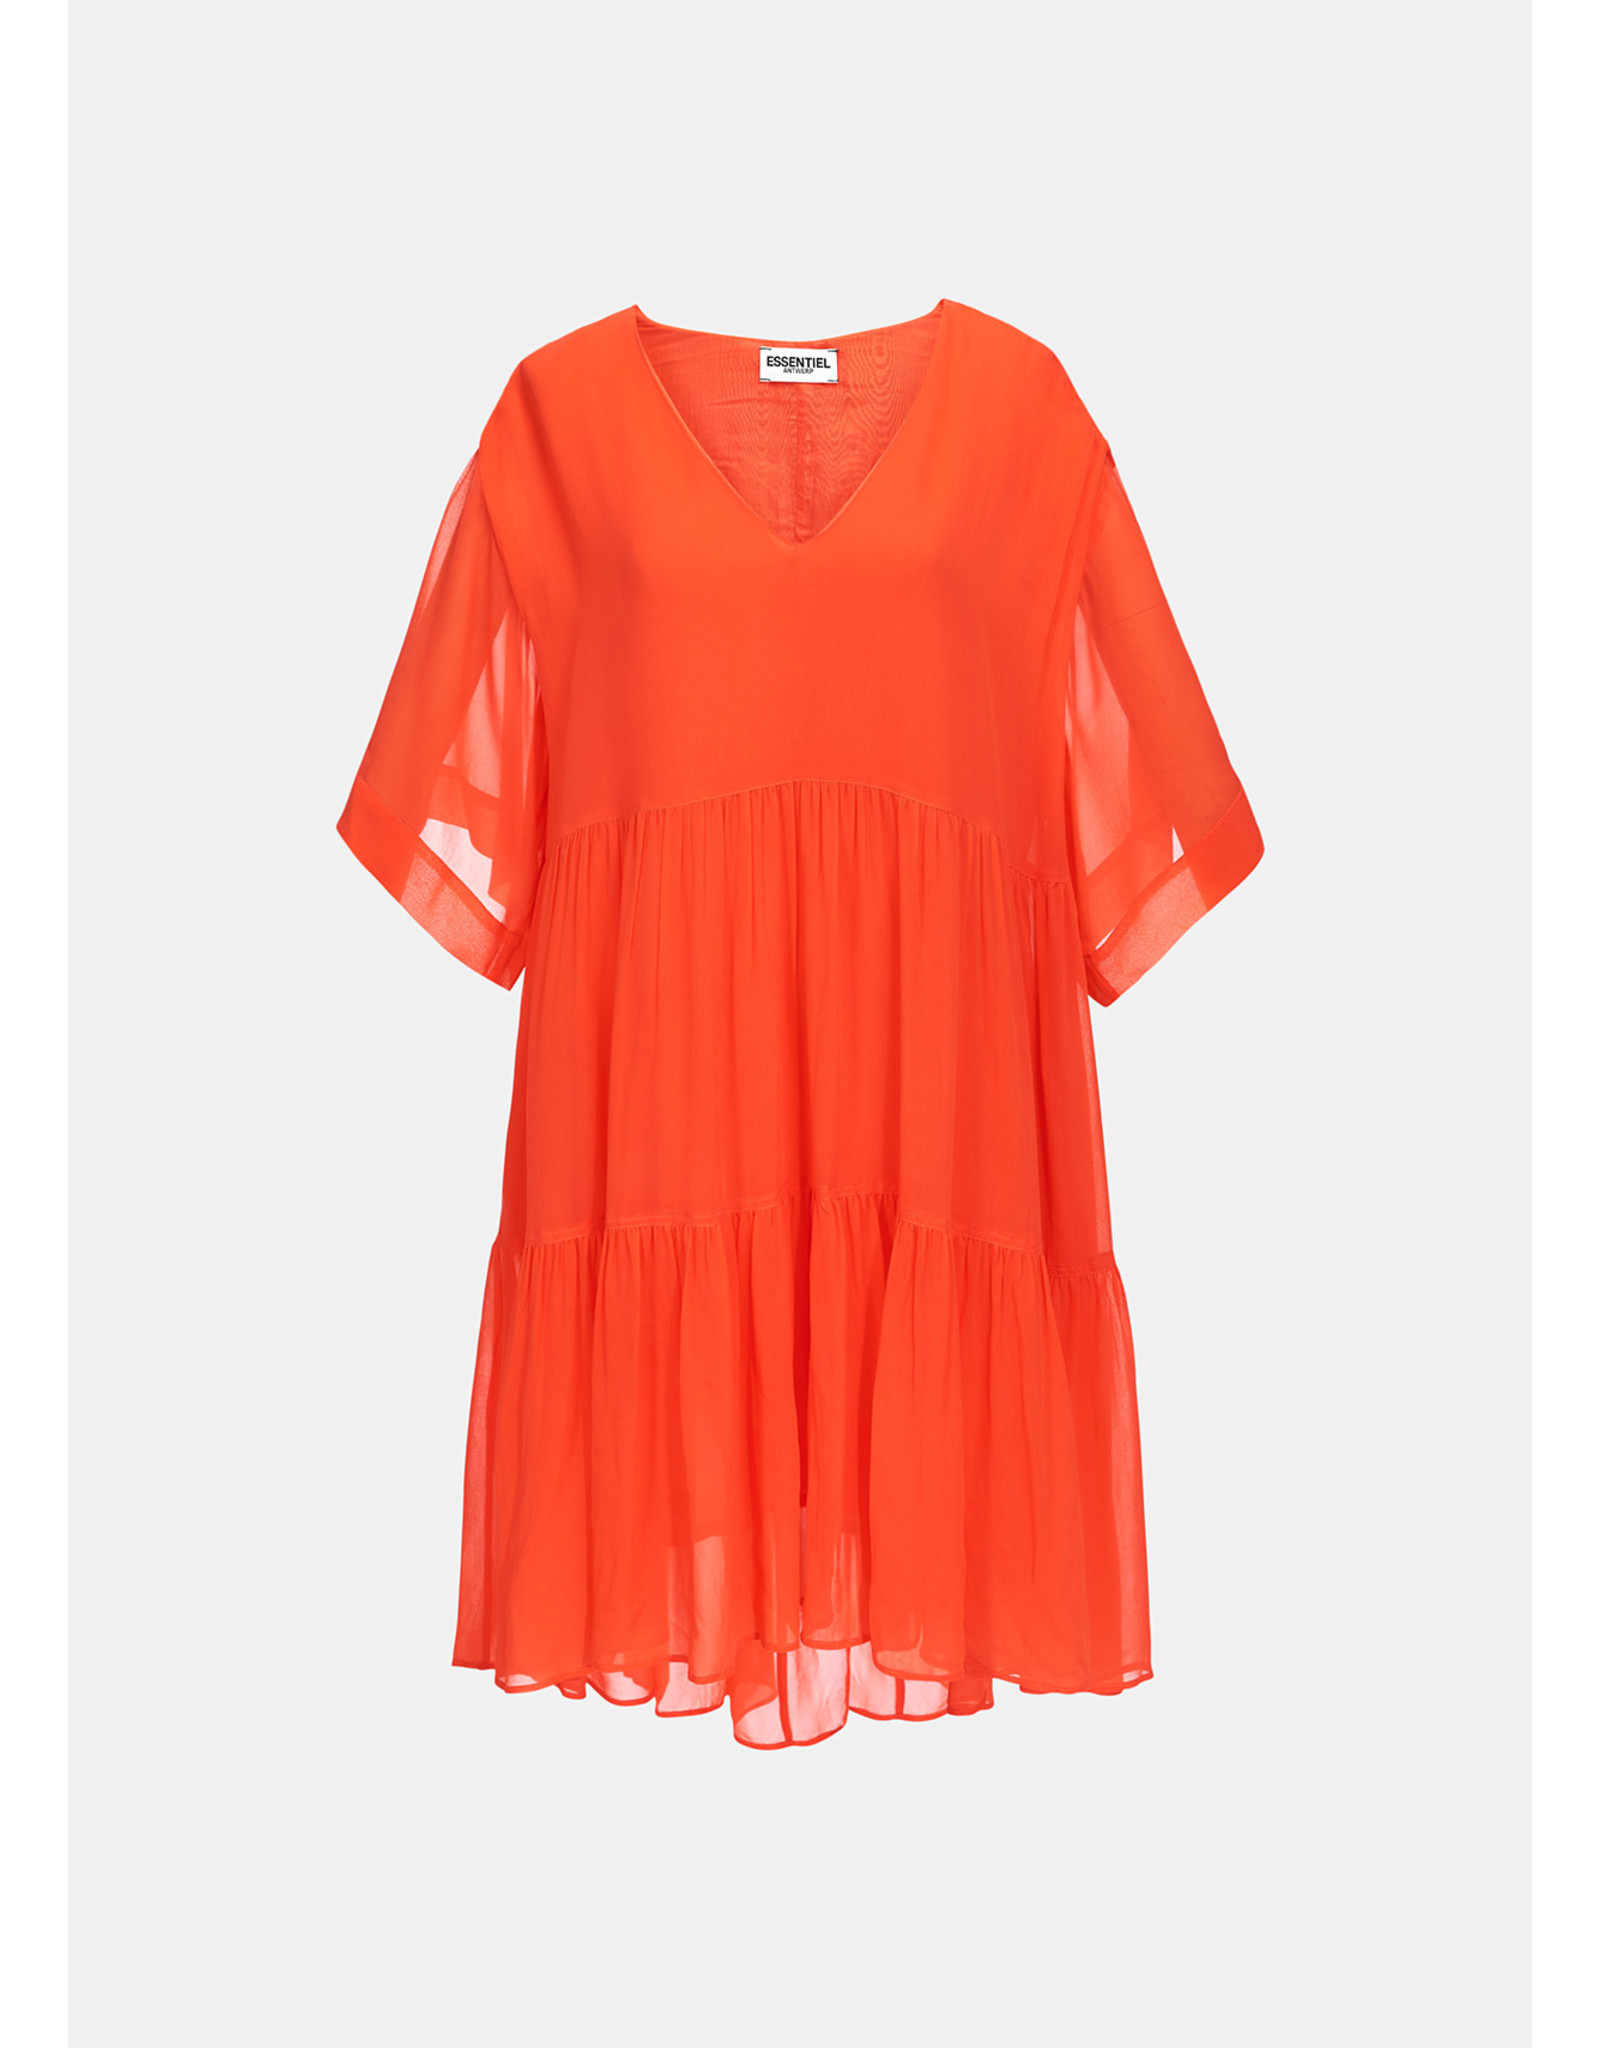 Essentiel Berling Orange Dress